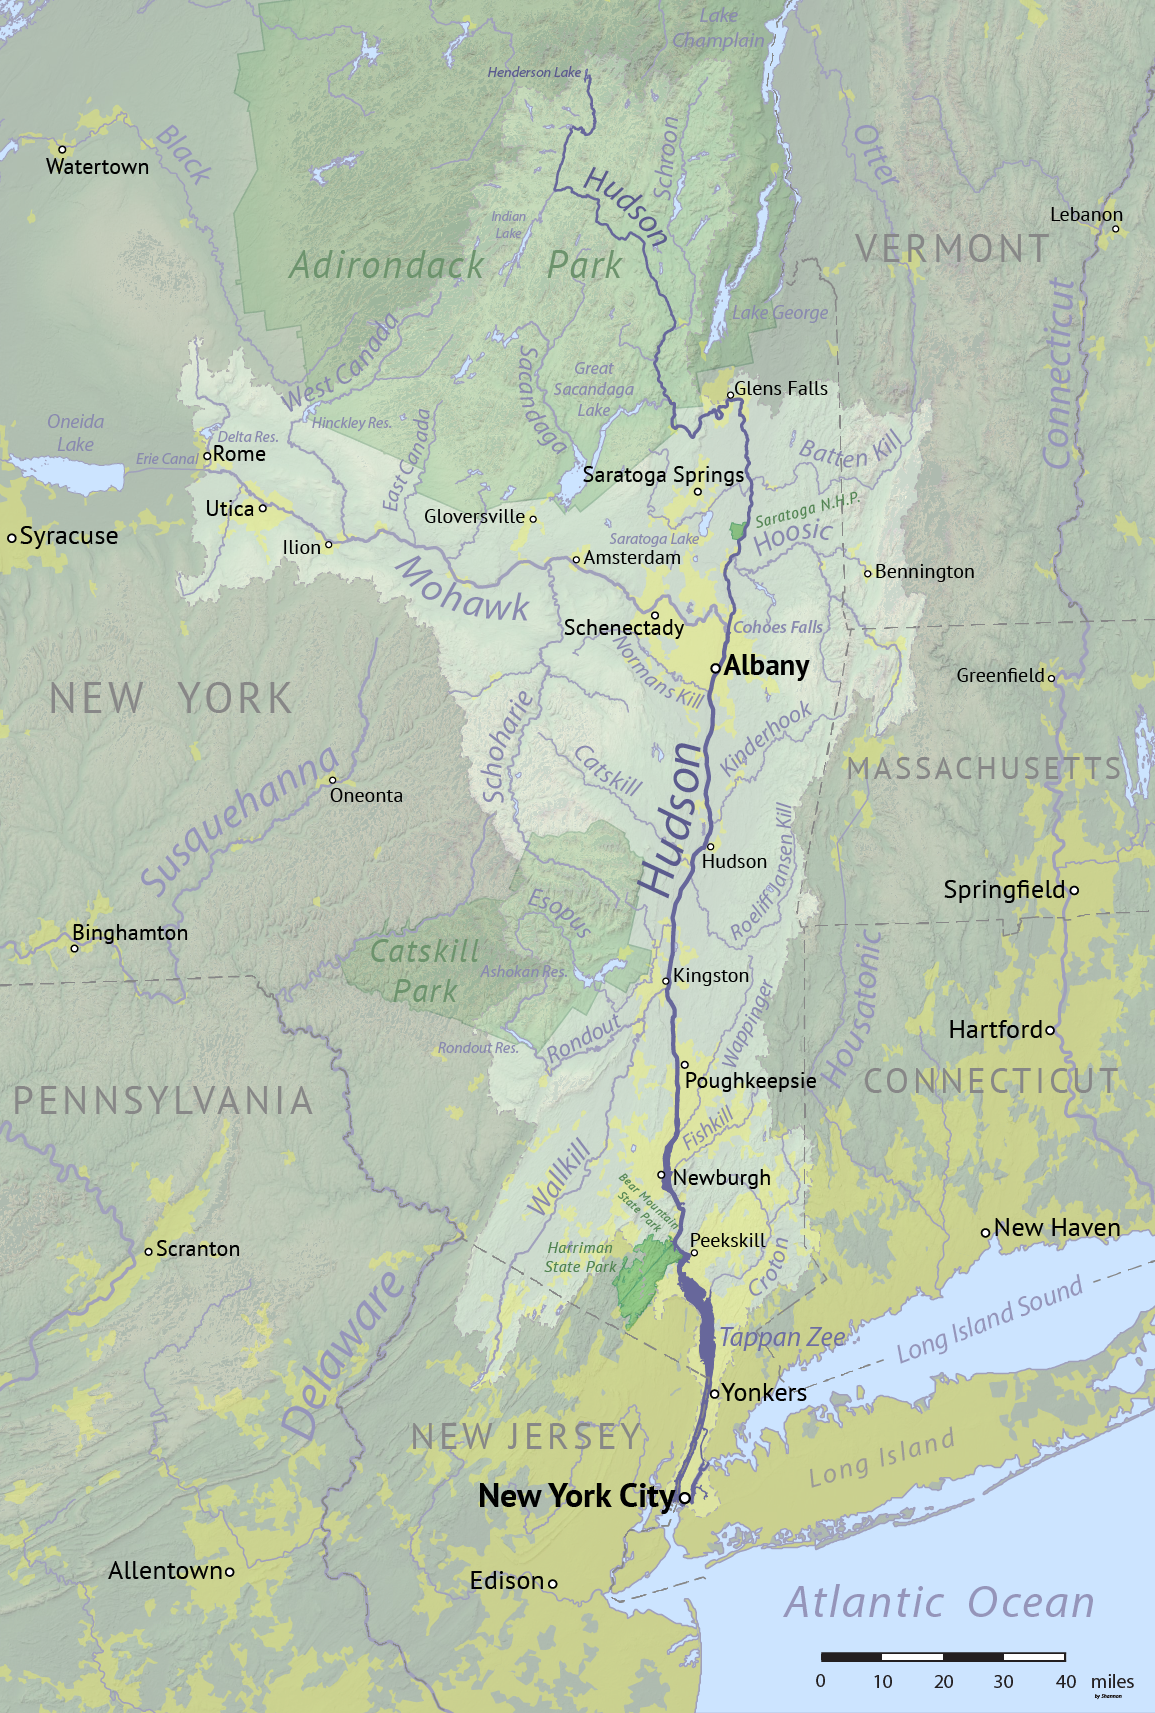 hudson river location map